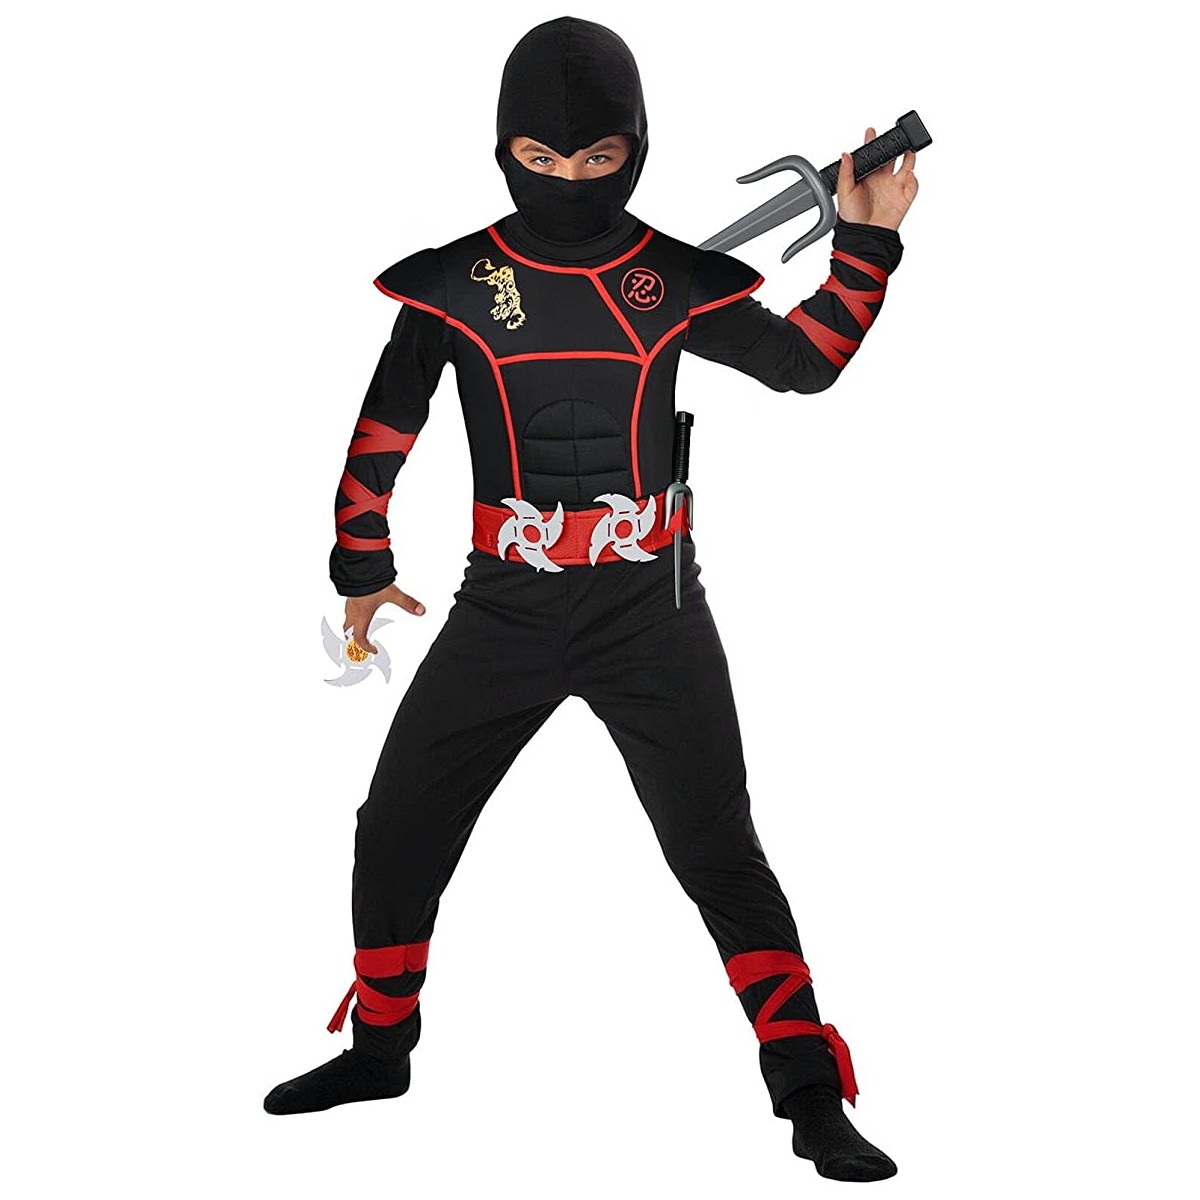 Costume da Ninja per Bambino, con maschera